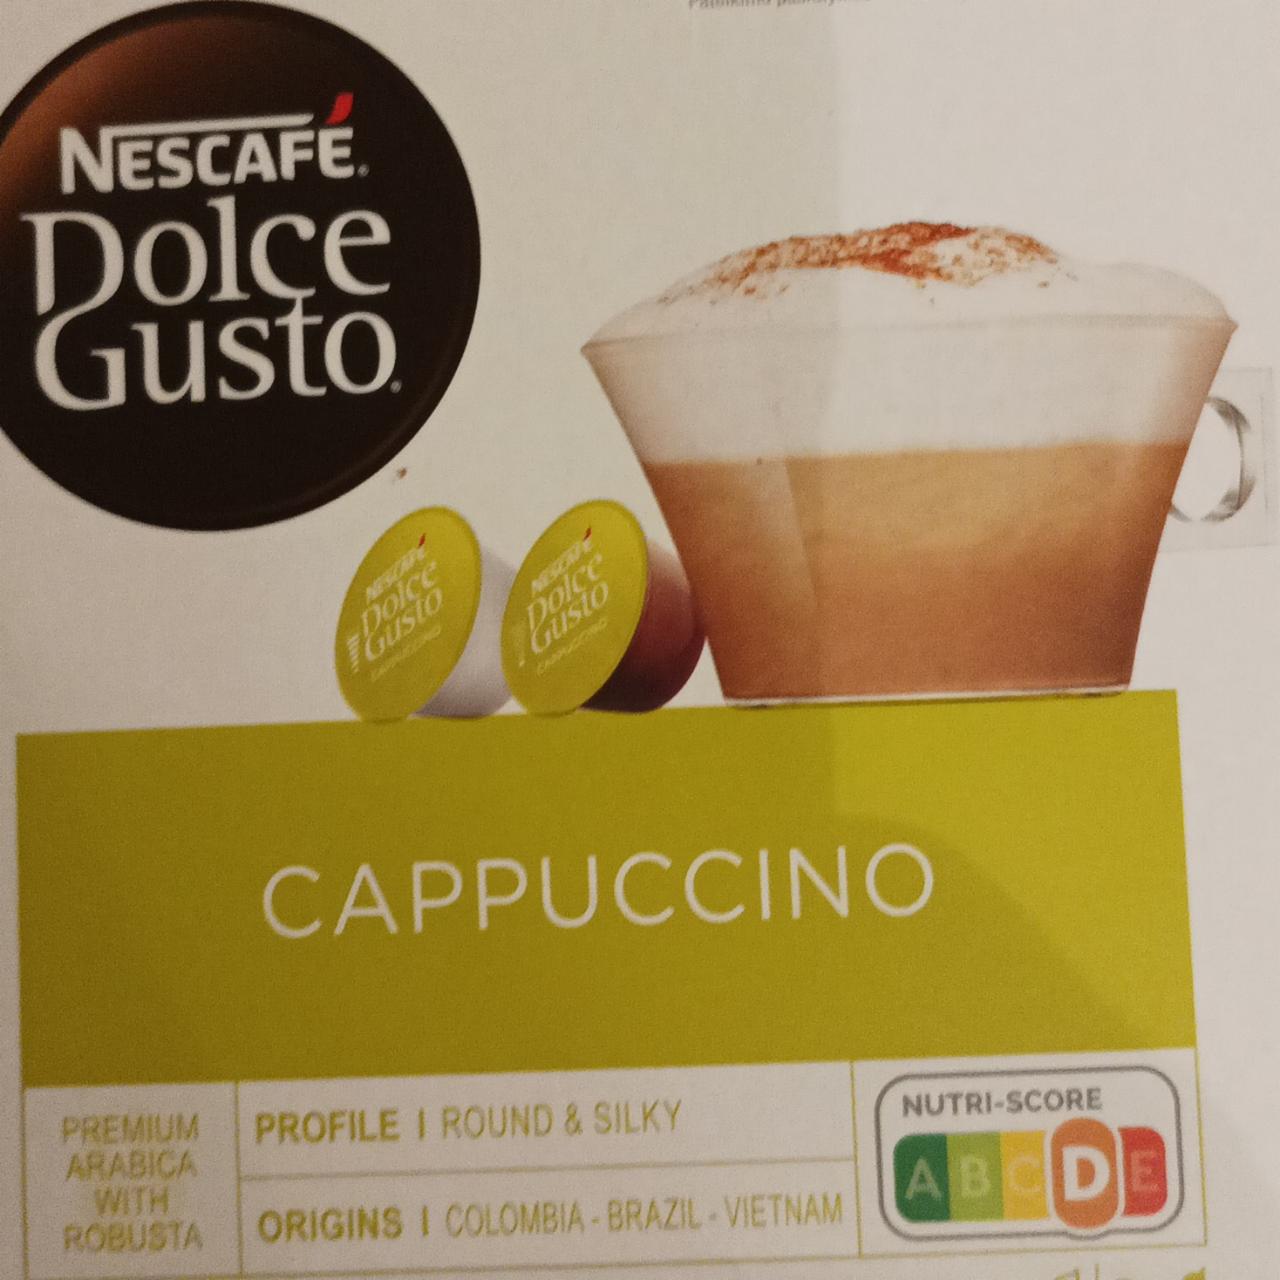 Képek - Dolce Gusto Cappuccino Nescafe